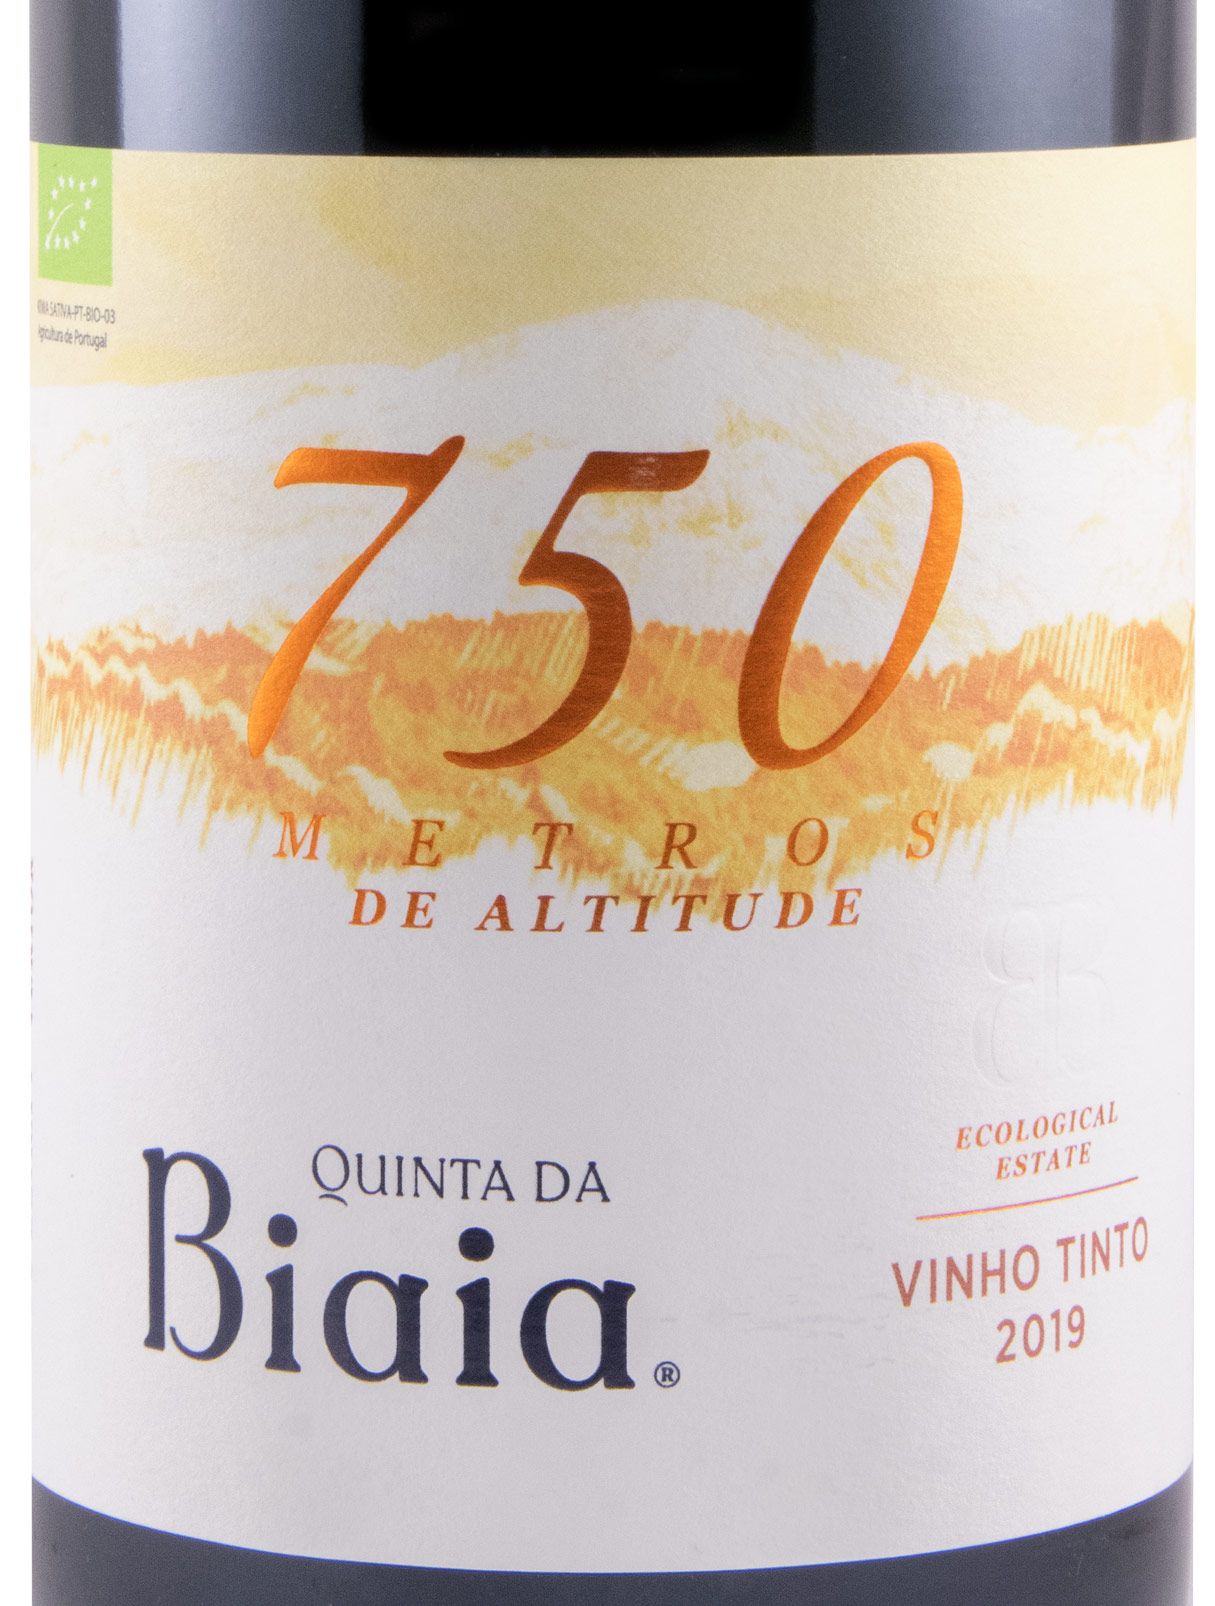 2019 Quinta da Biaia 750 biológico tinto